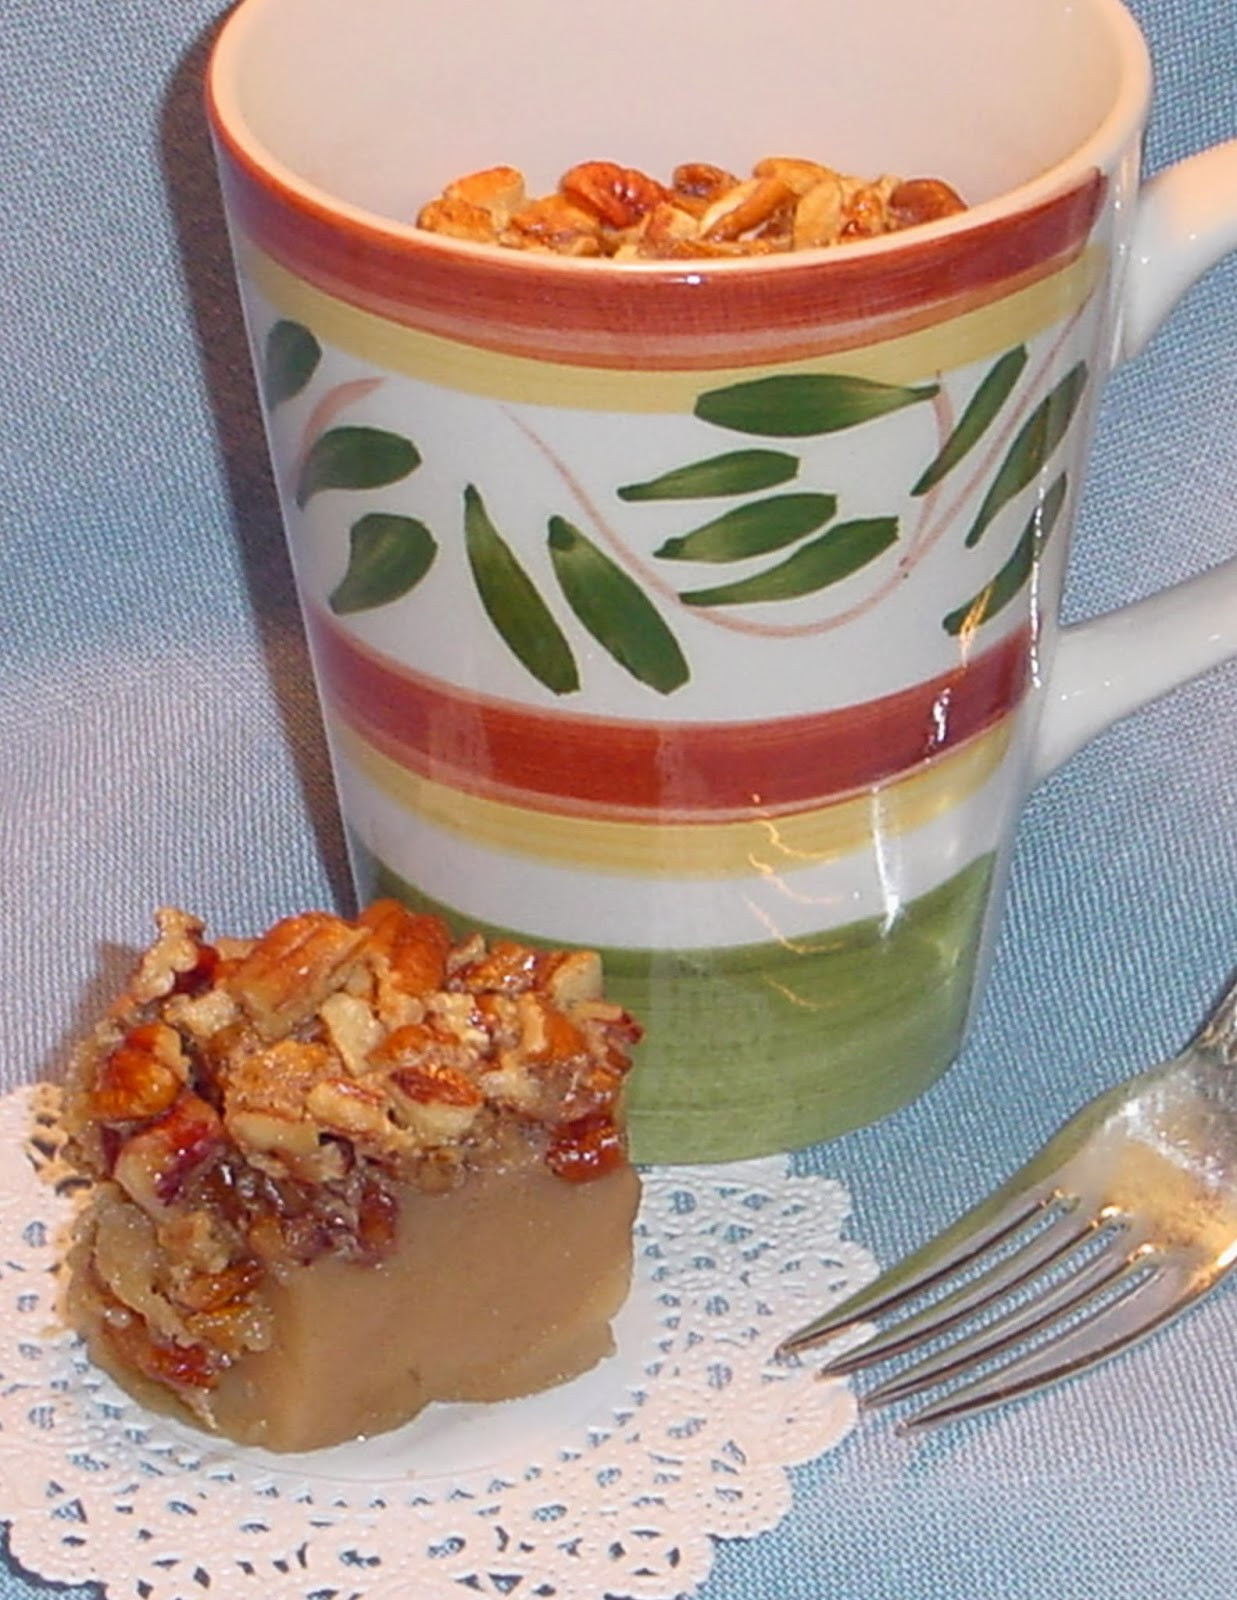 Microwave Dessert In A Mug
 Easy Microwave Desserts in a Mug